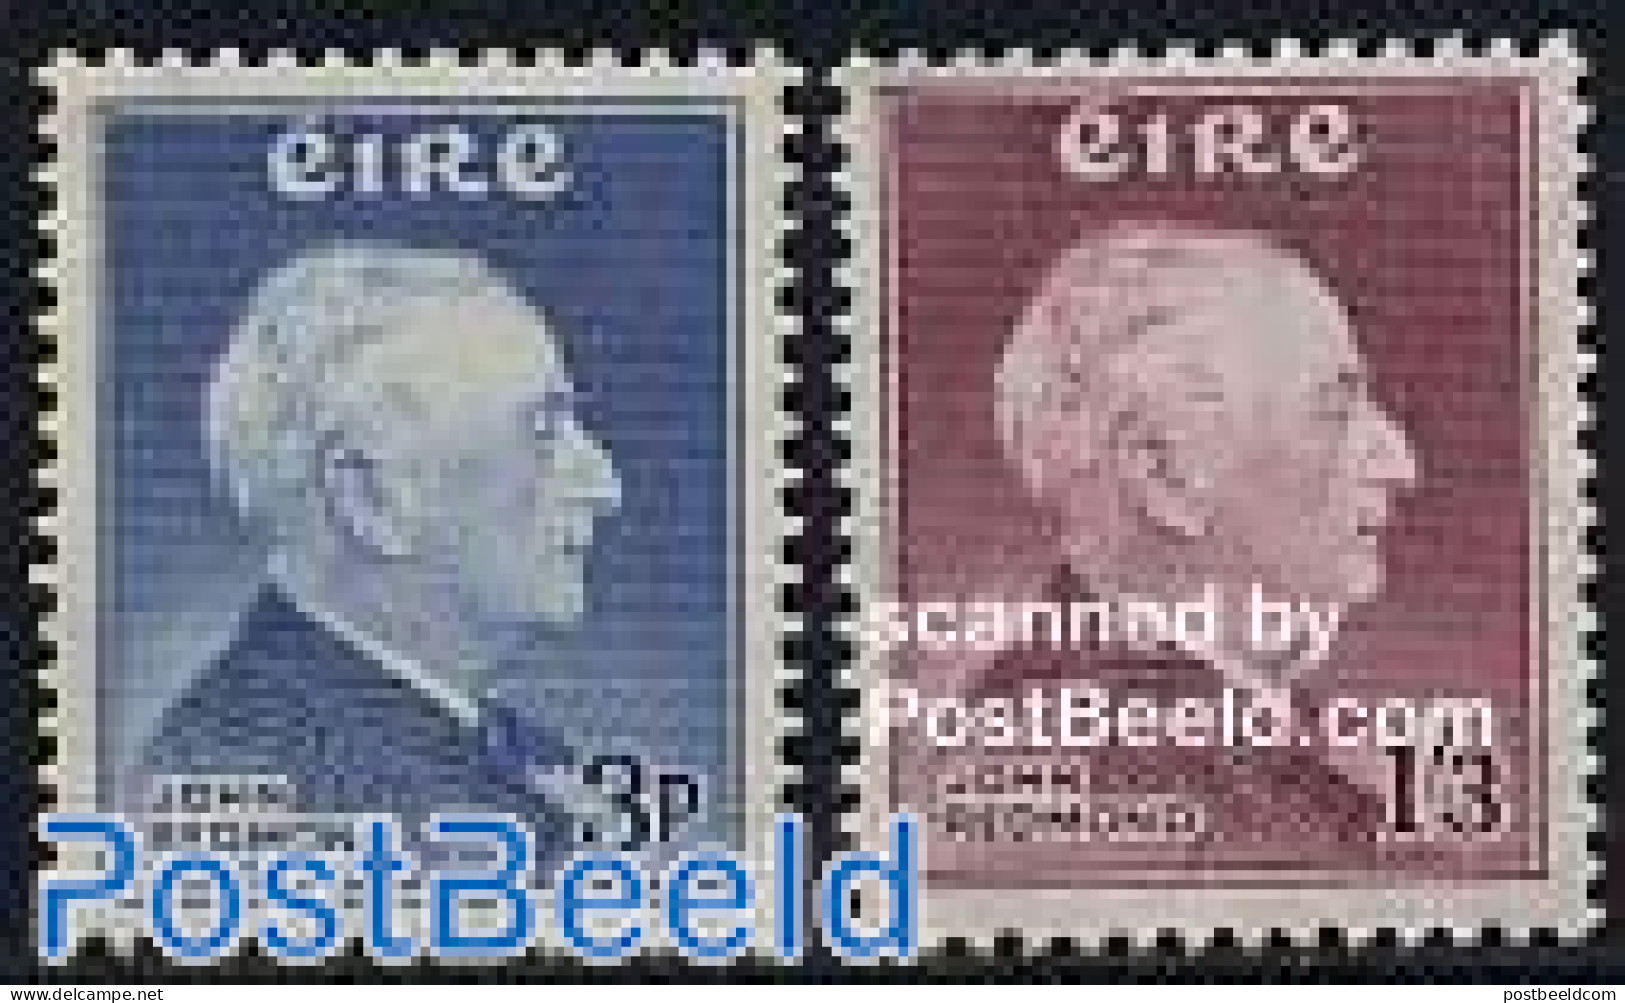 Ireland 1957 J.E. Redmond 2v, Mint NH, History - Politicians - Nuevos